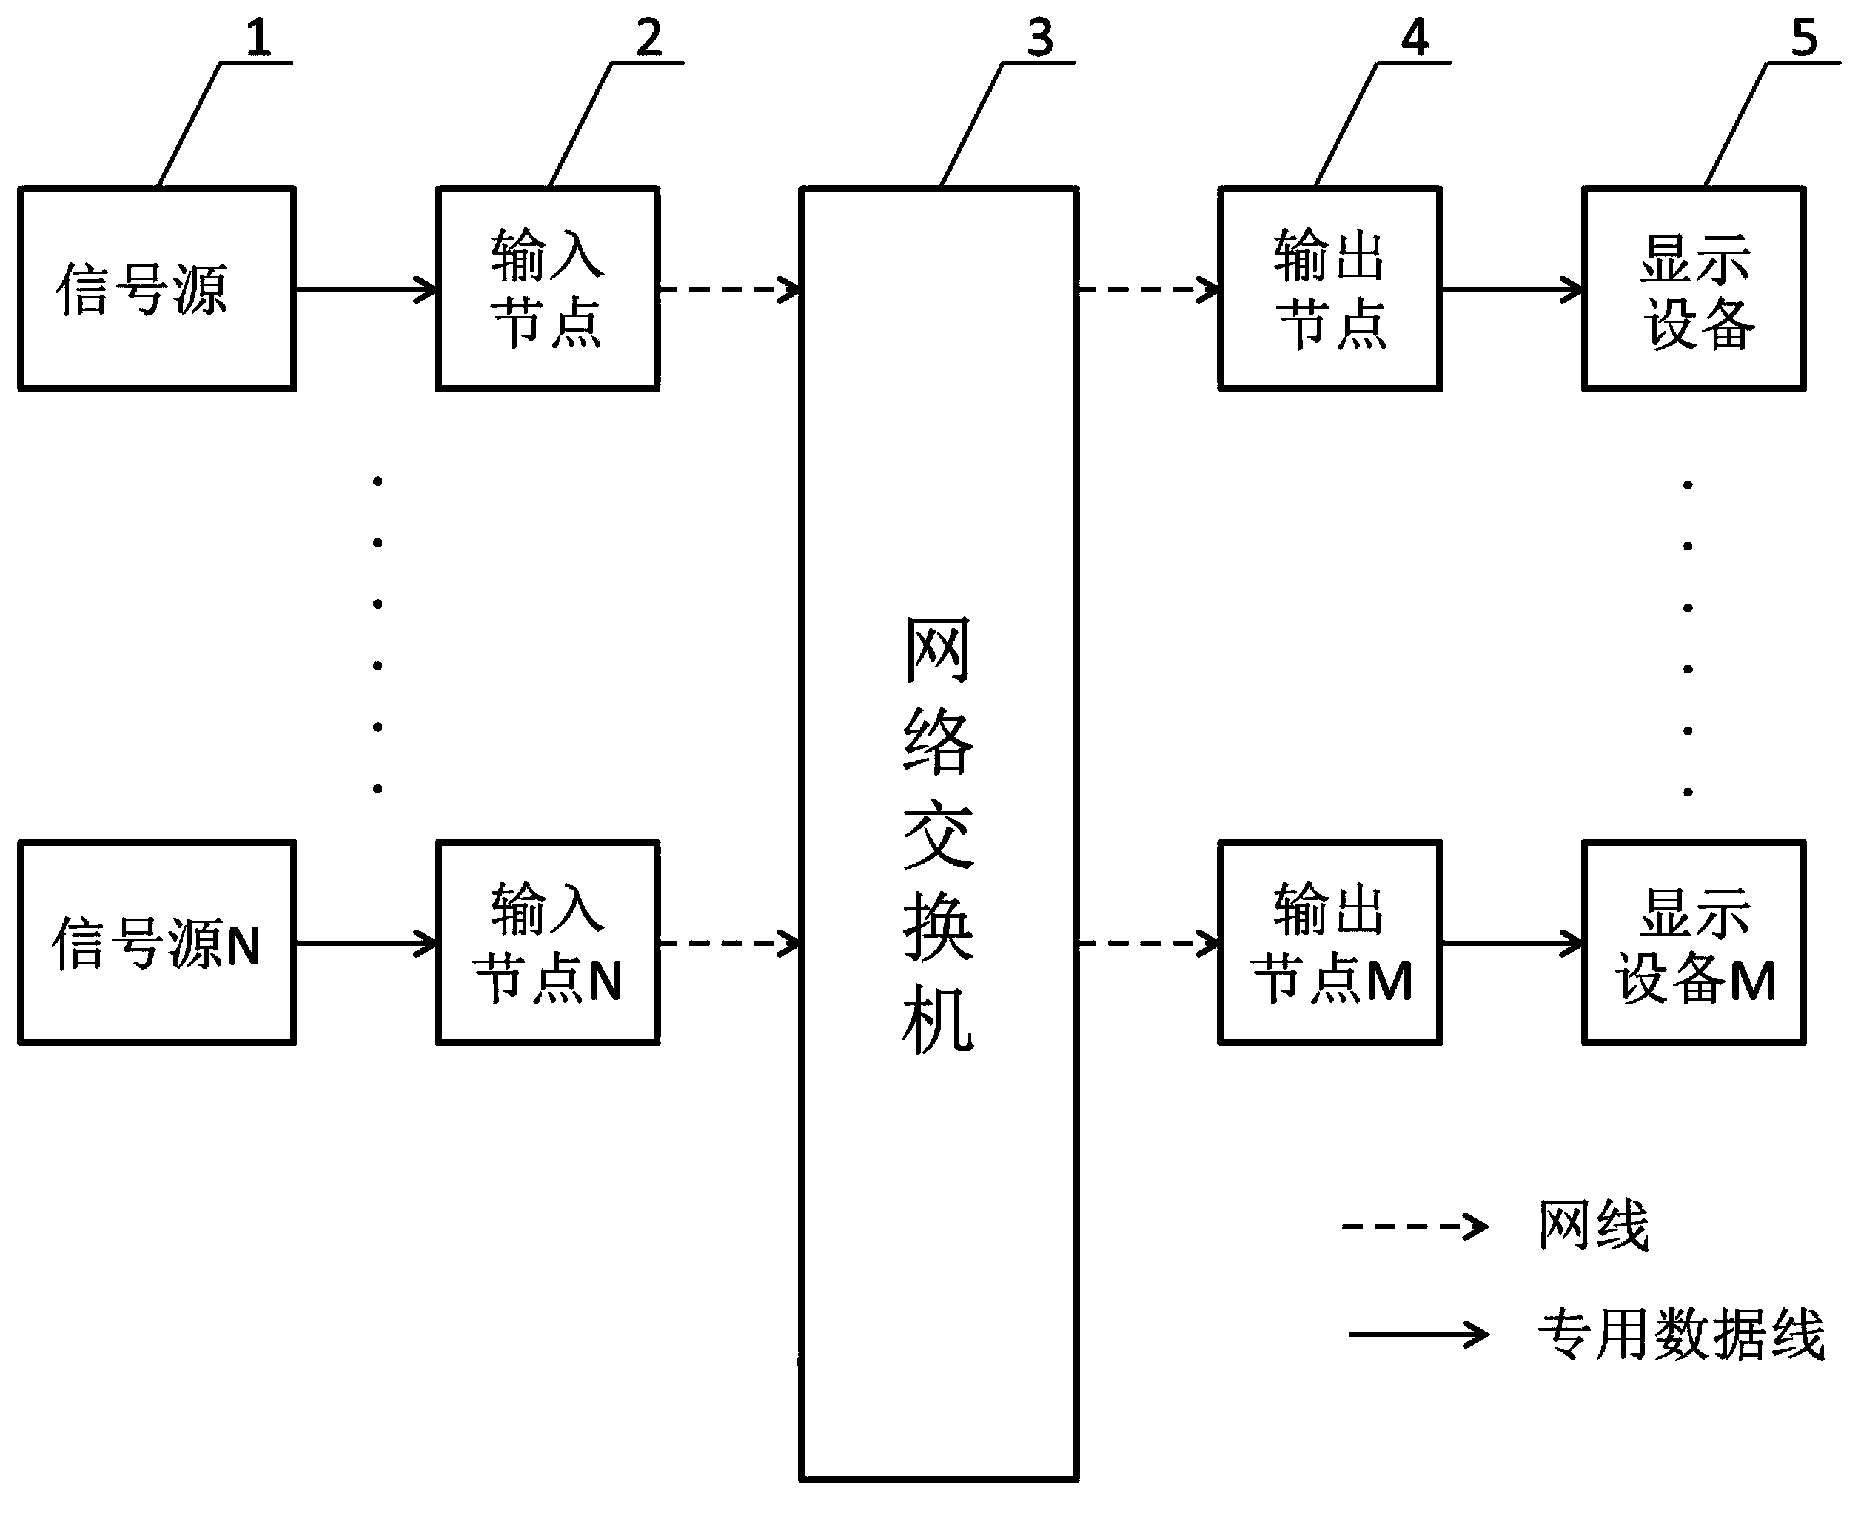 Distributed matrix switching system